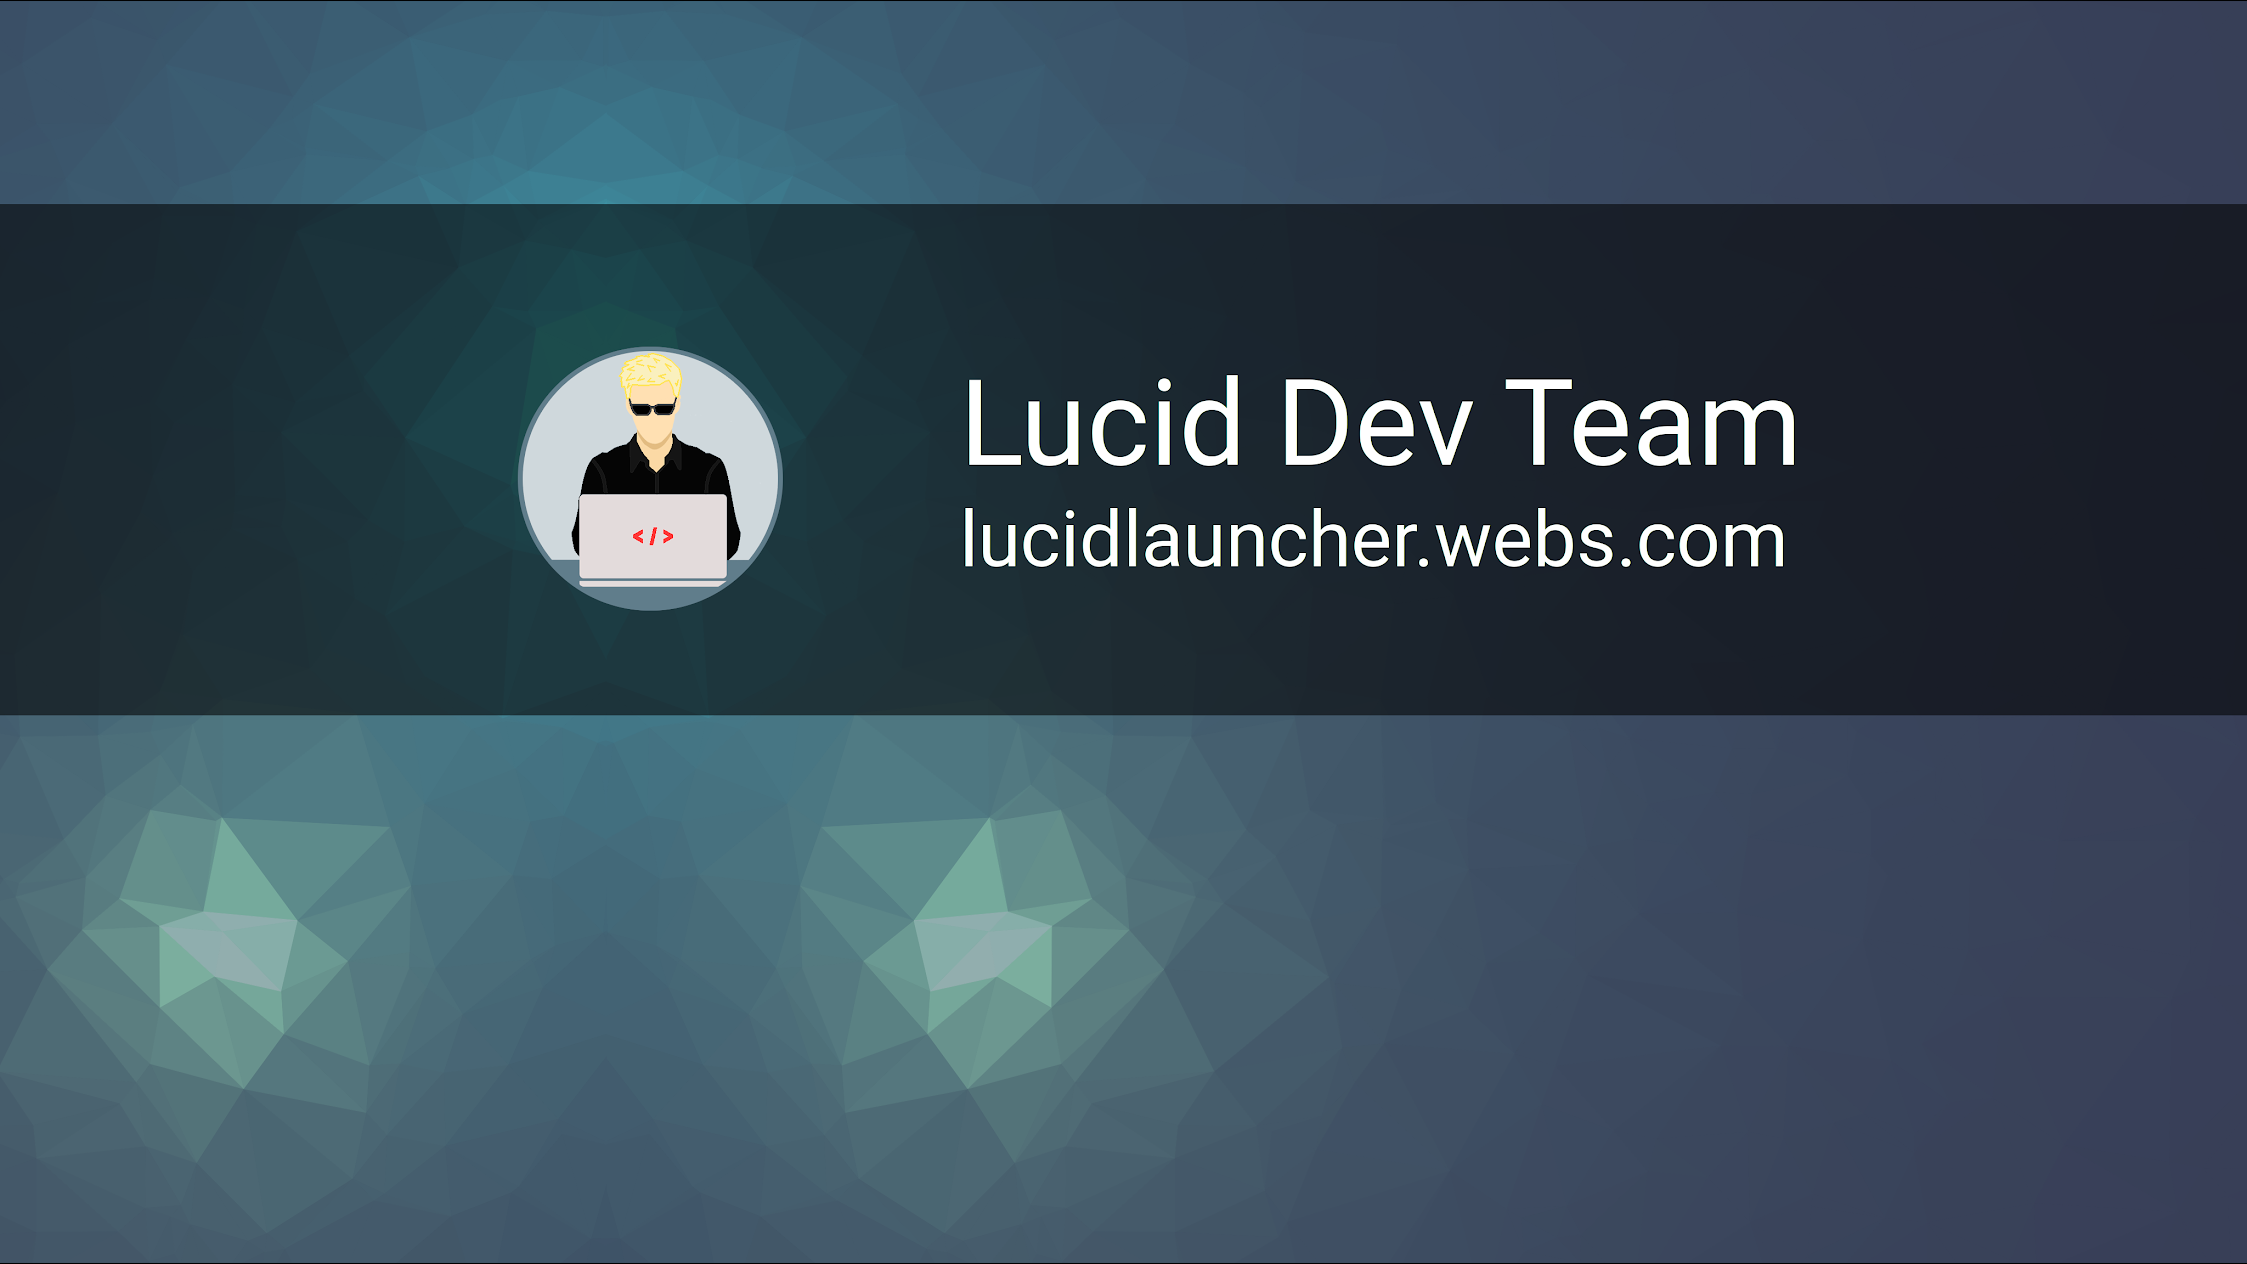 Lucid Dev Team